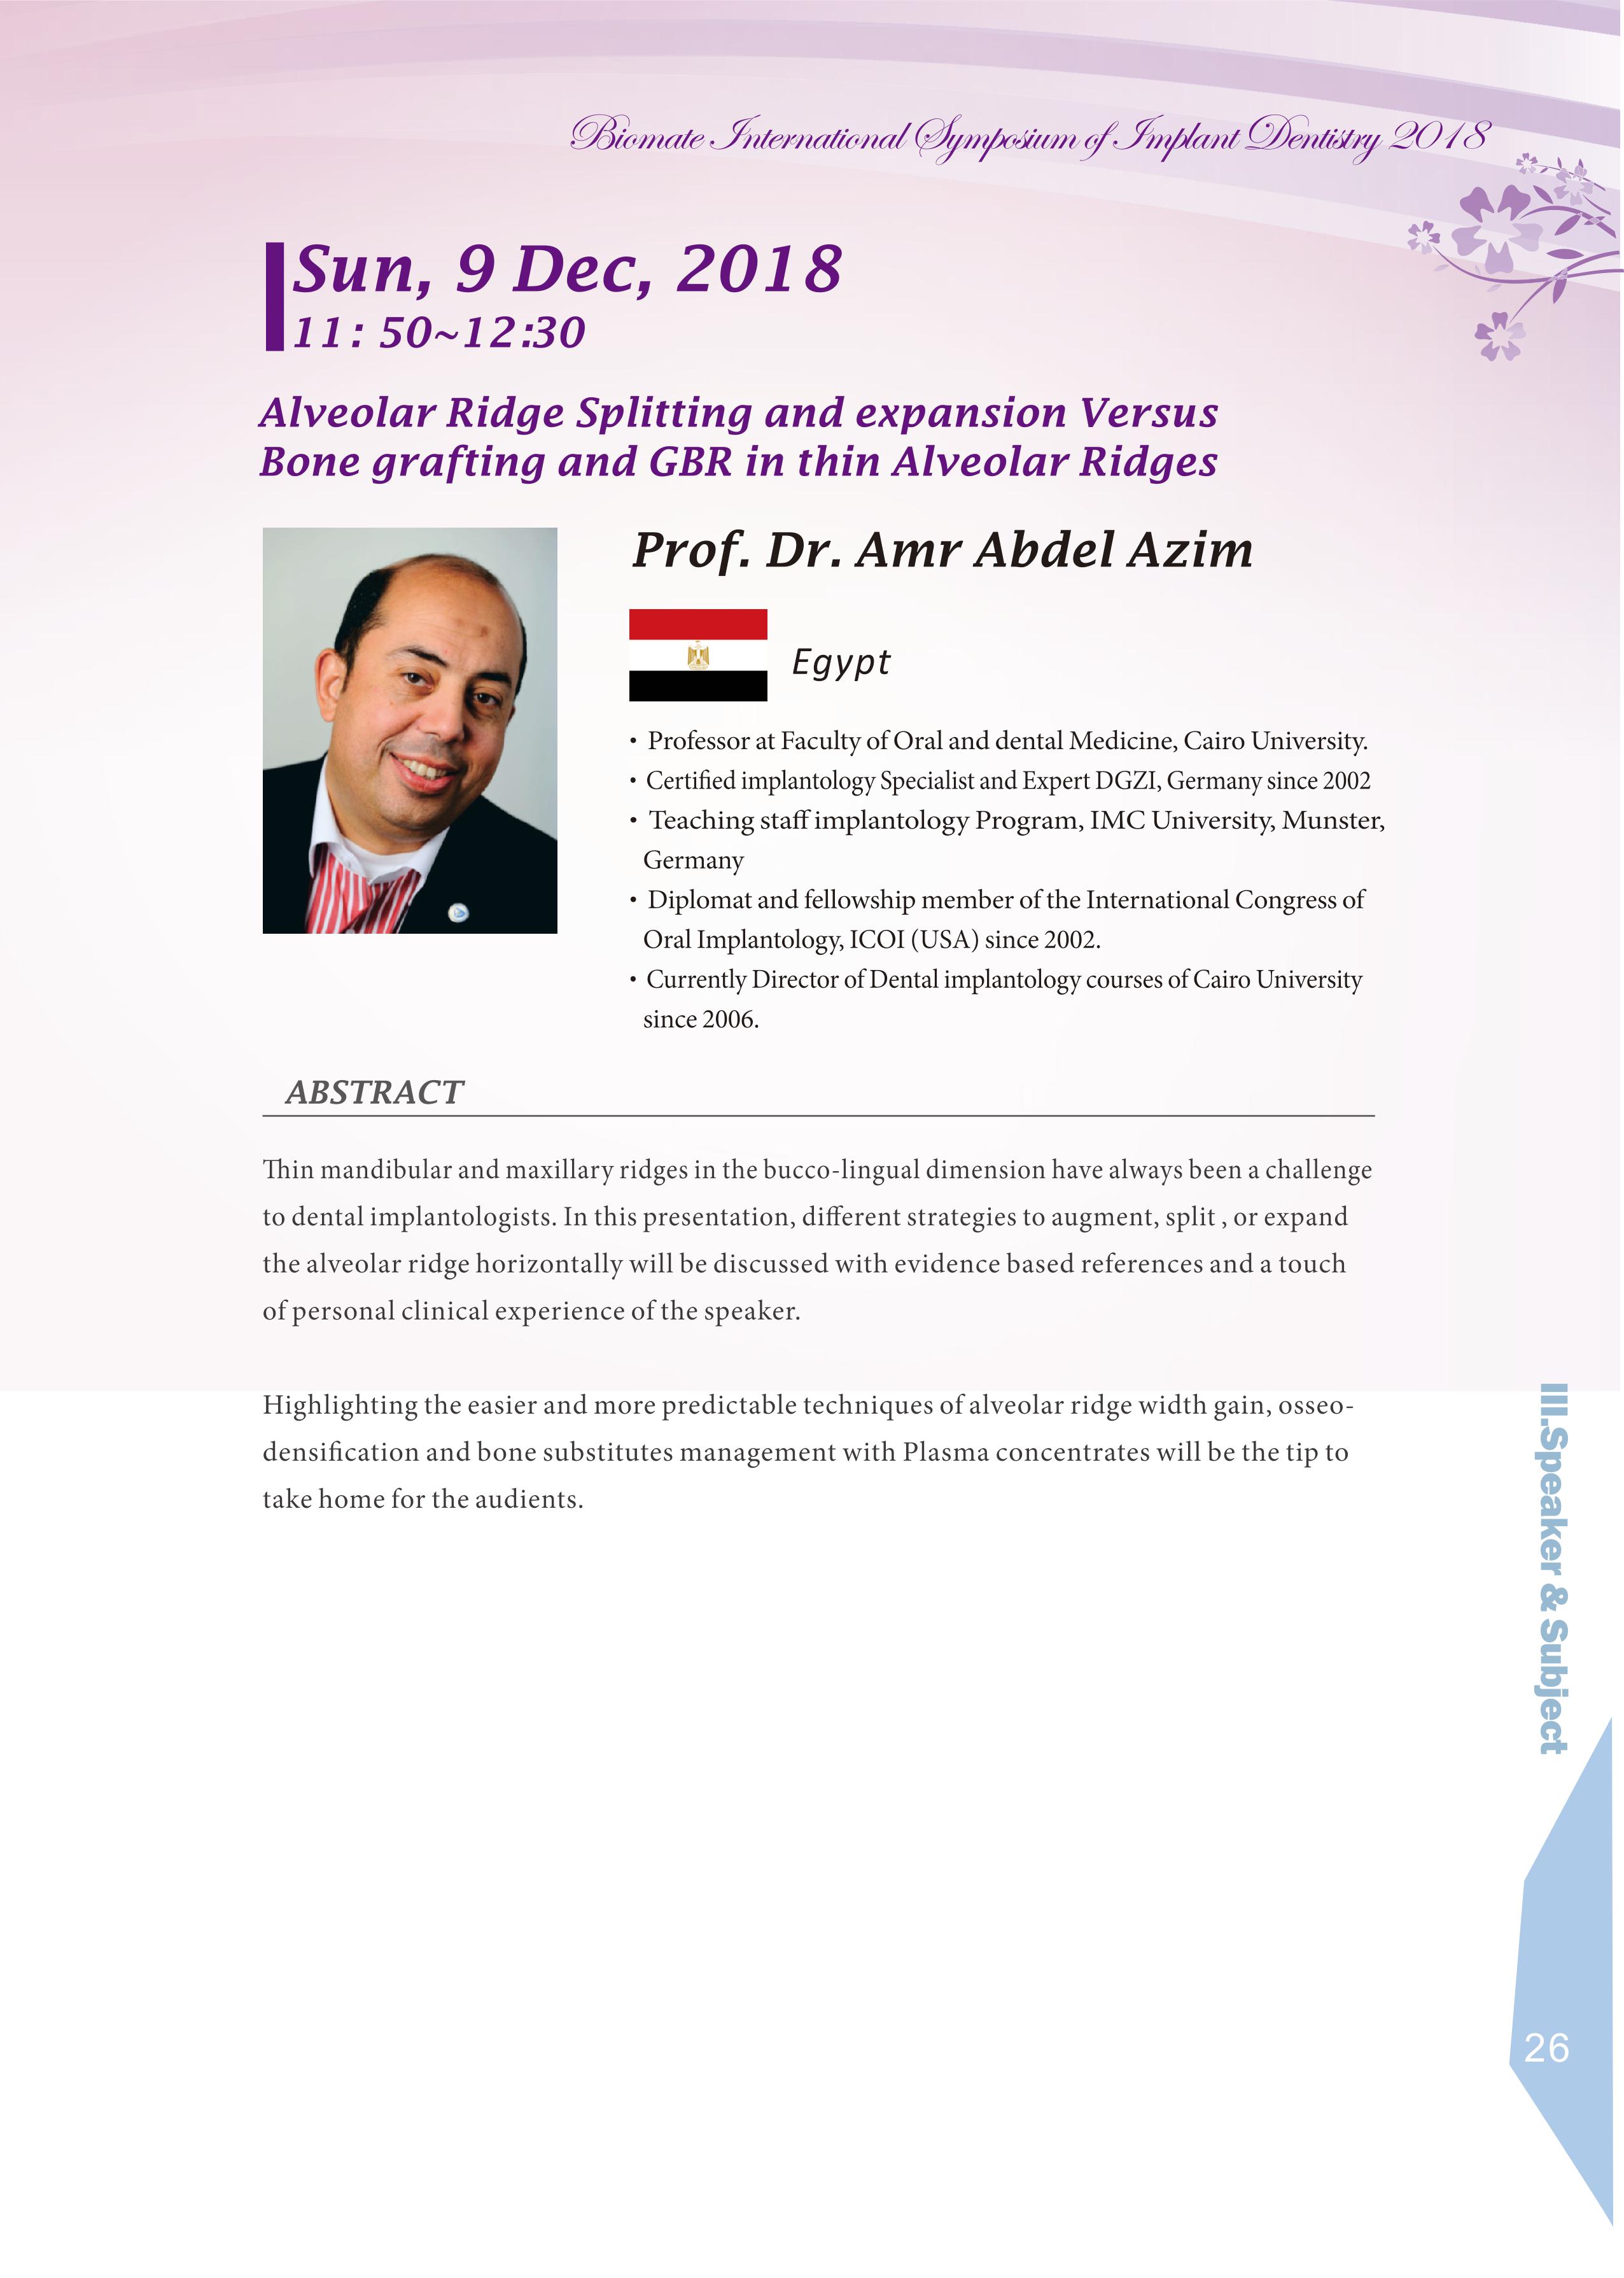 Biomate Internation Symposium of Implant Dentistry-Prof.Dr.Amr Abdel Azim